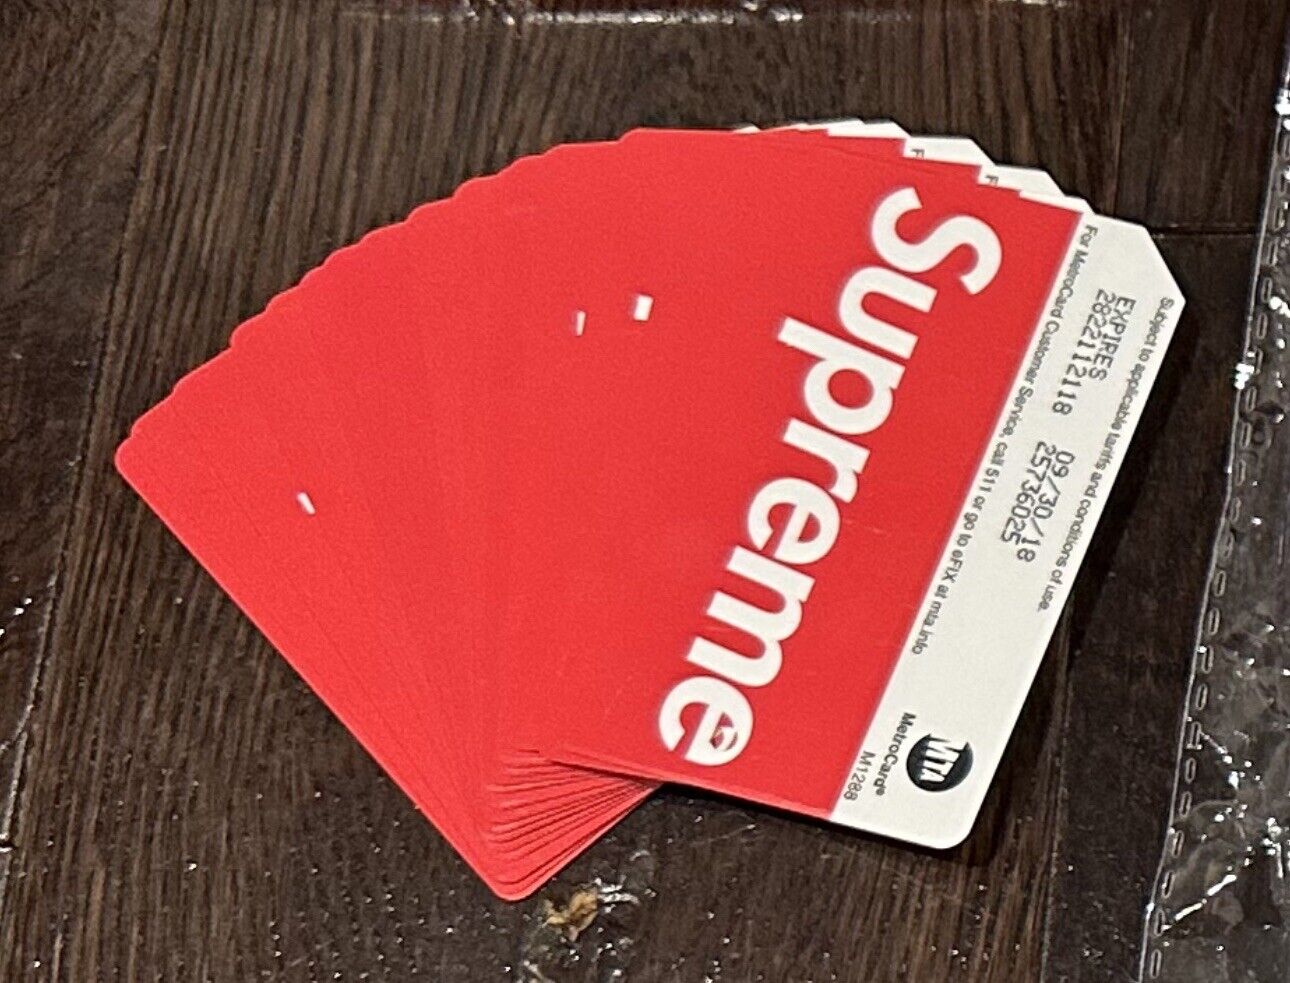 Supreme Metro Card NYC Subway MTA Train Pass New York City Metrocard SS17